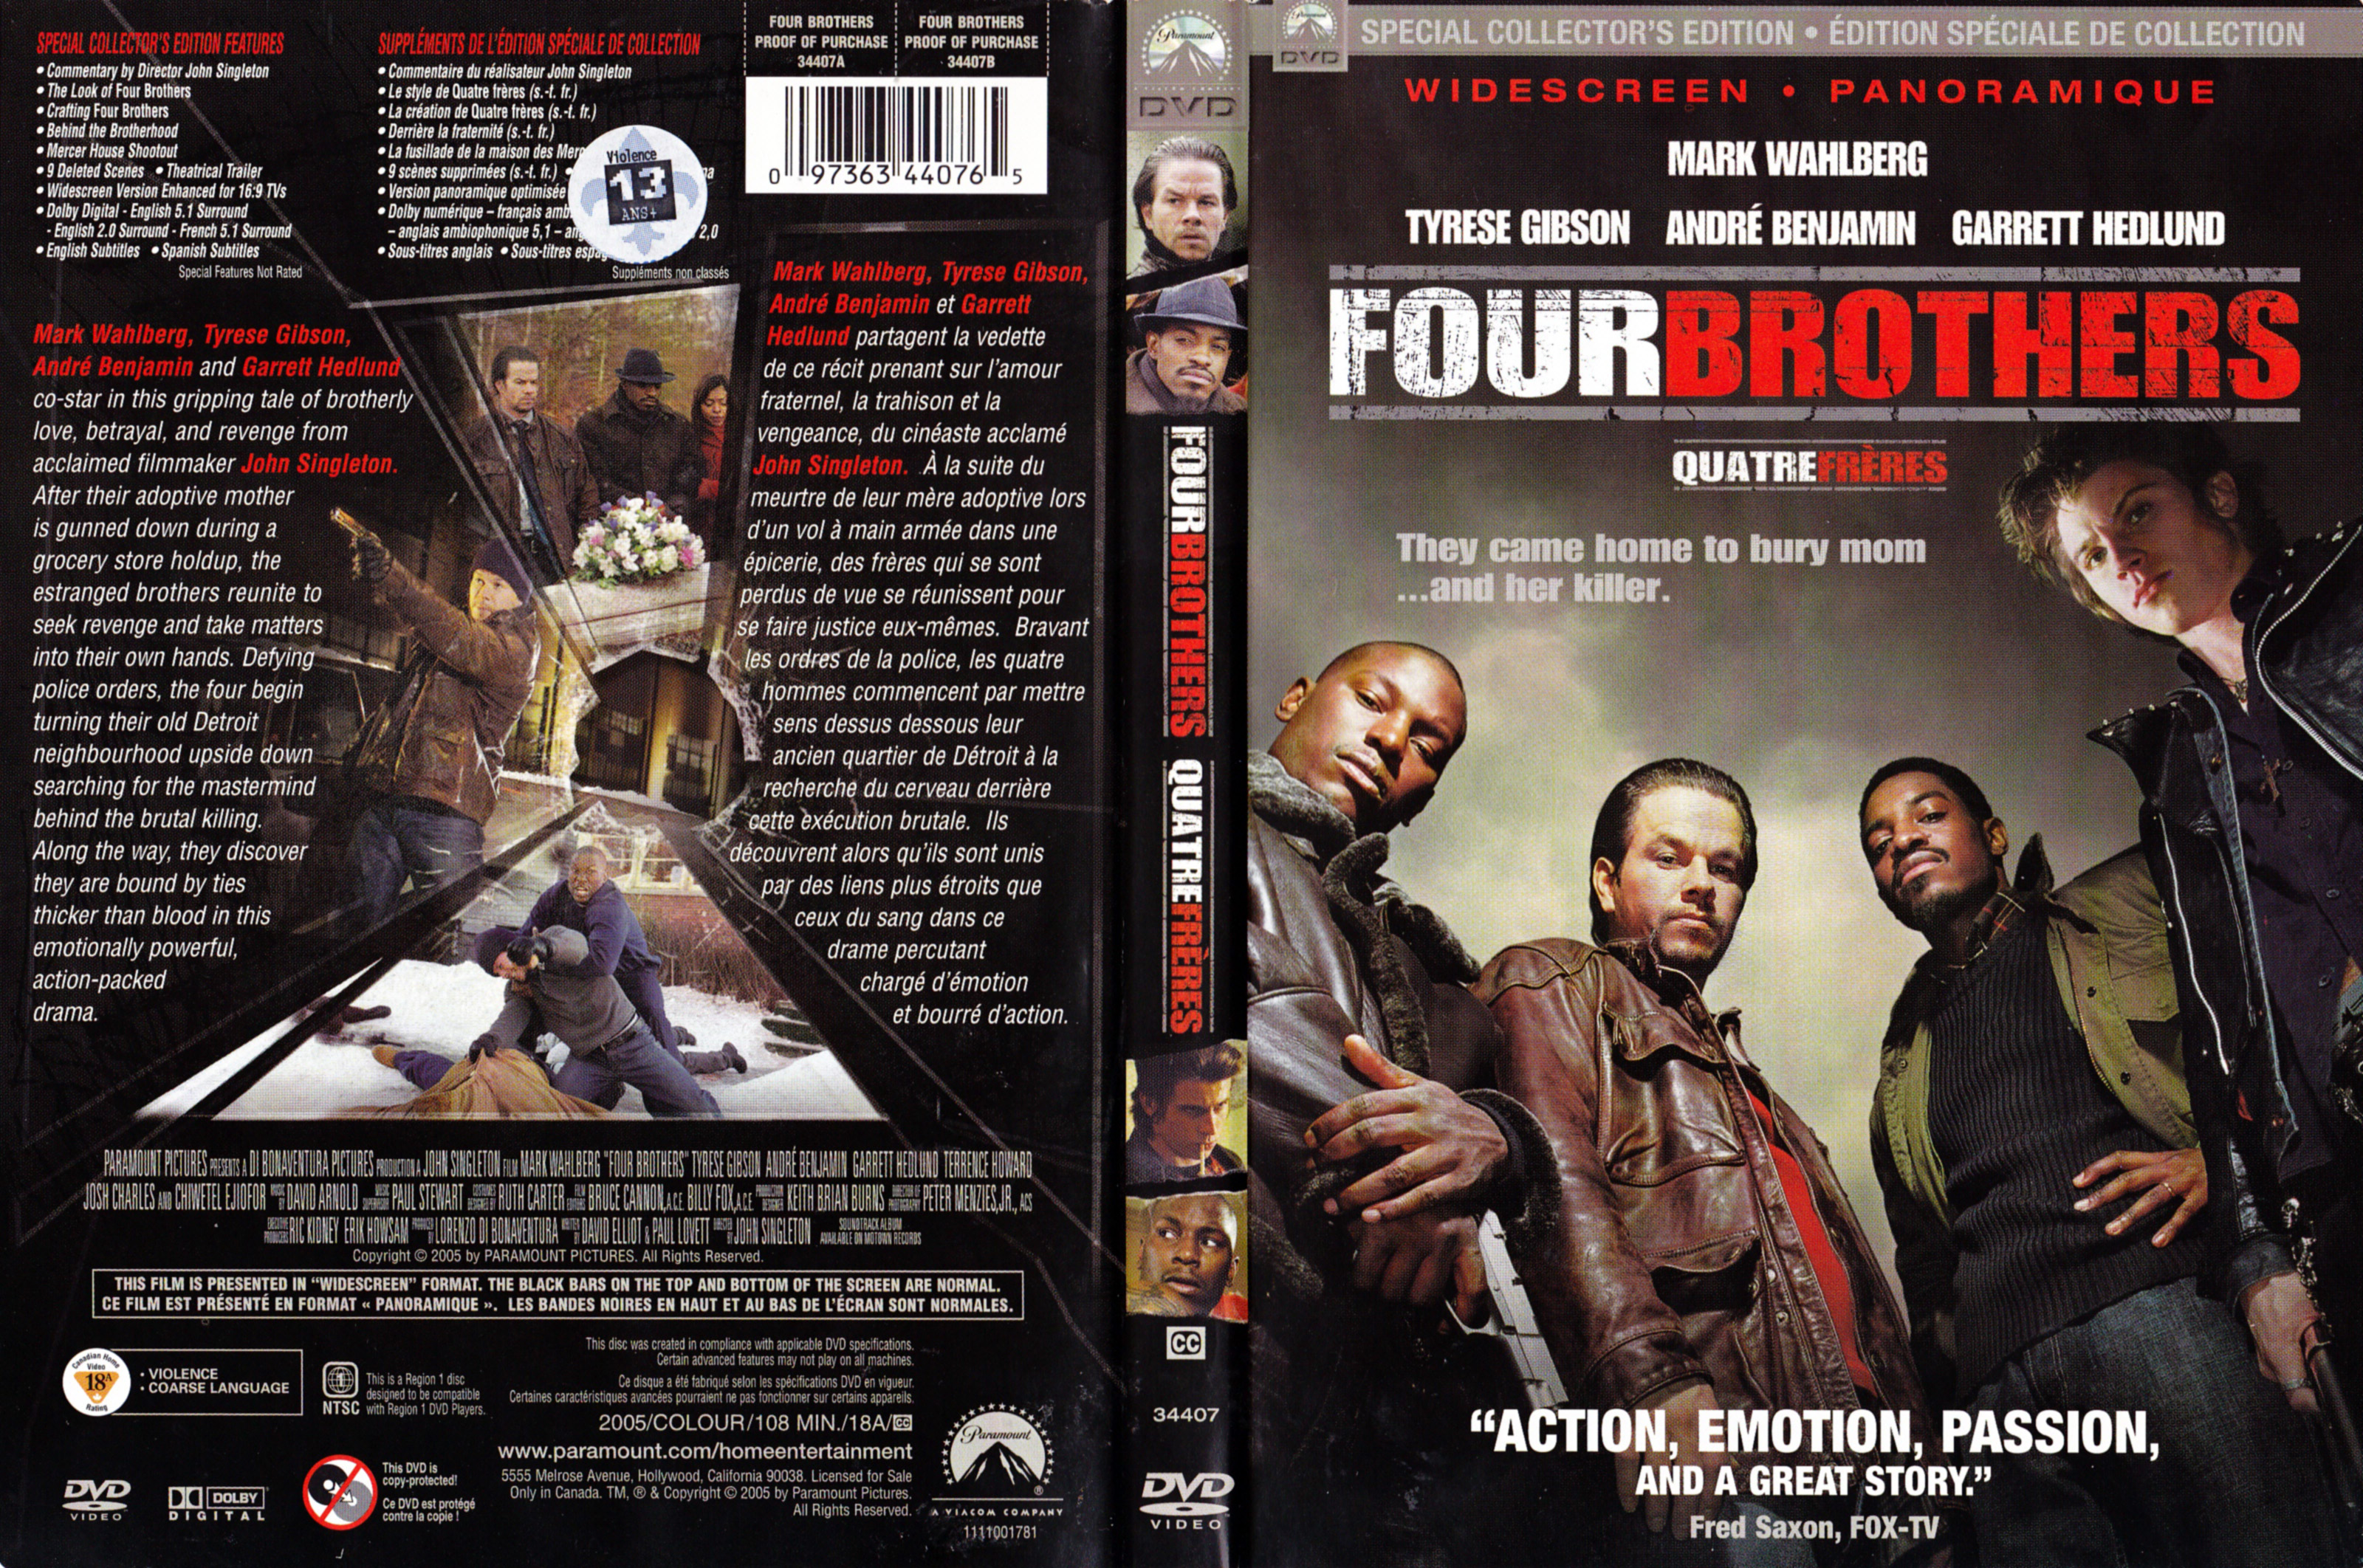 Jaquette DVD Four brothers - Quatre frres (Canadienne)